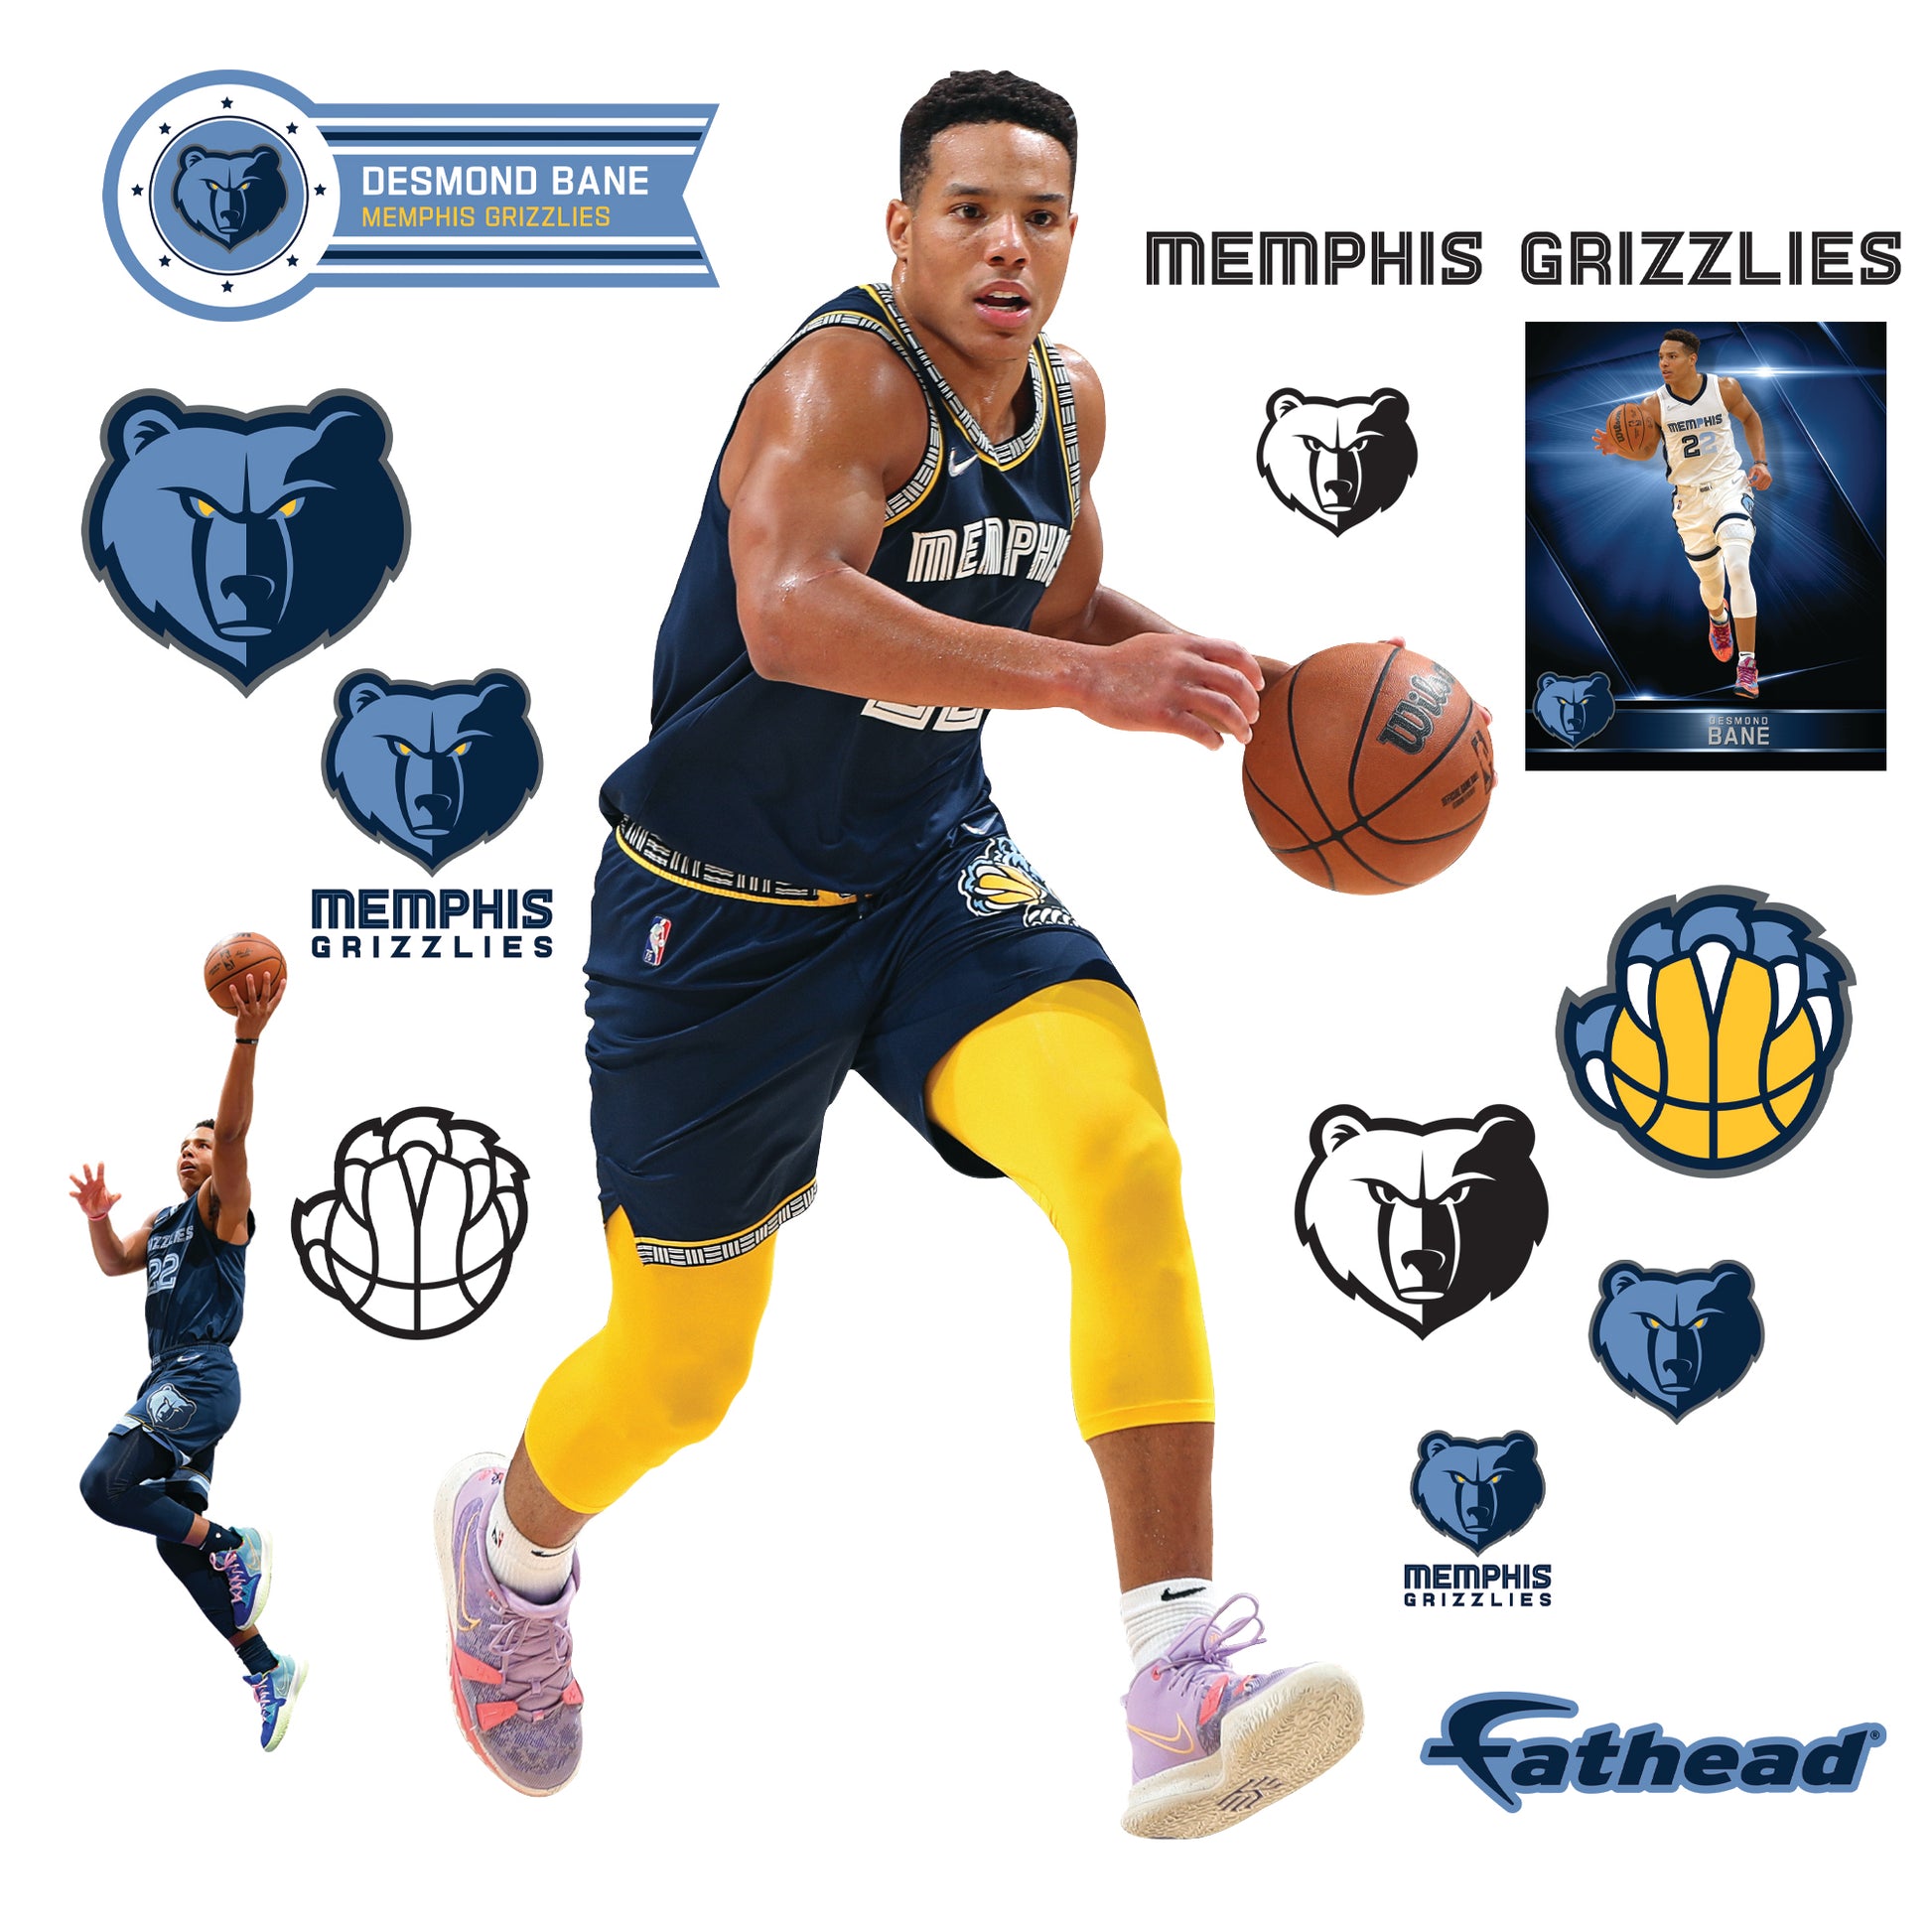 Desmond Bane NBA - Memphis Grizzlies Merchandise